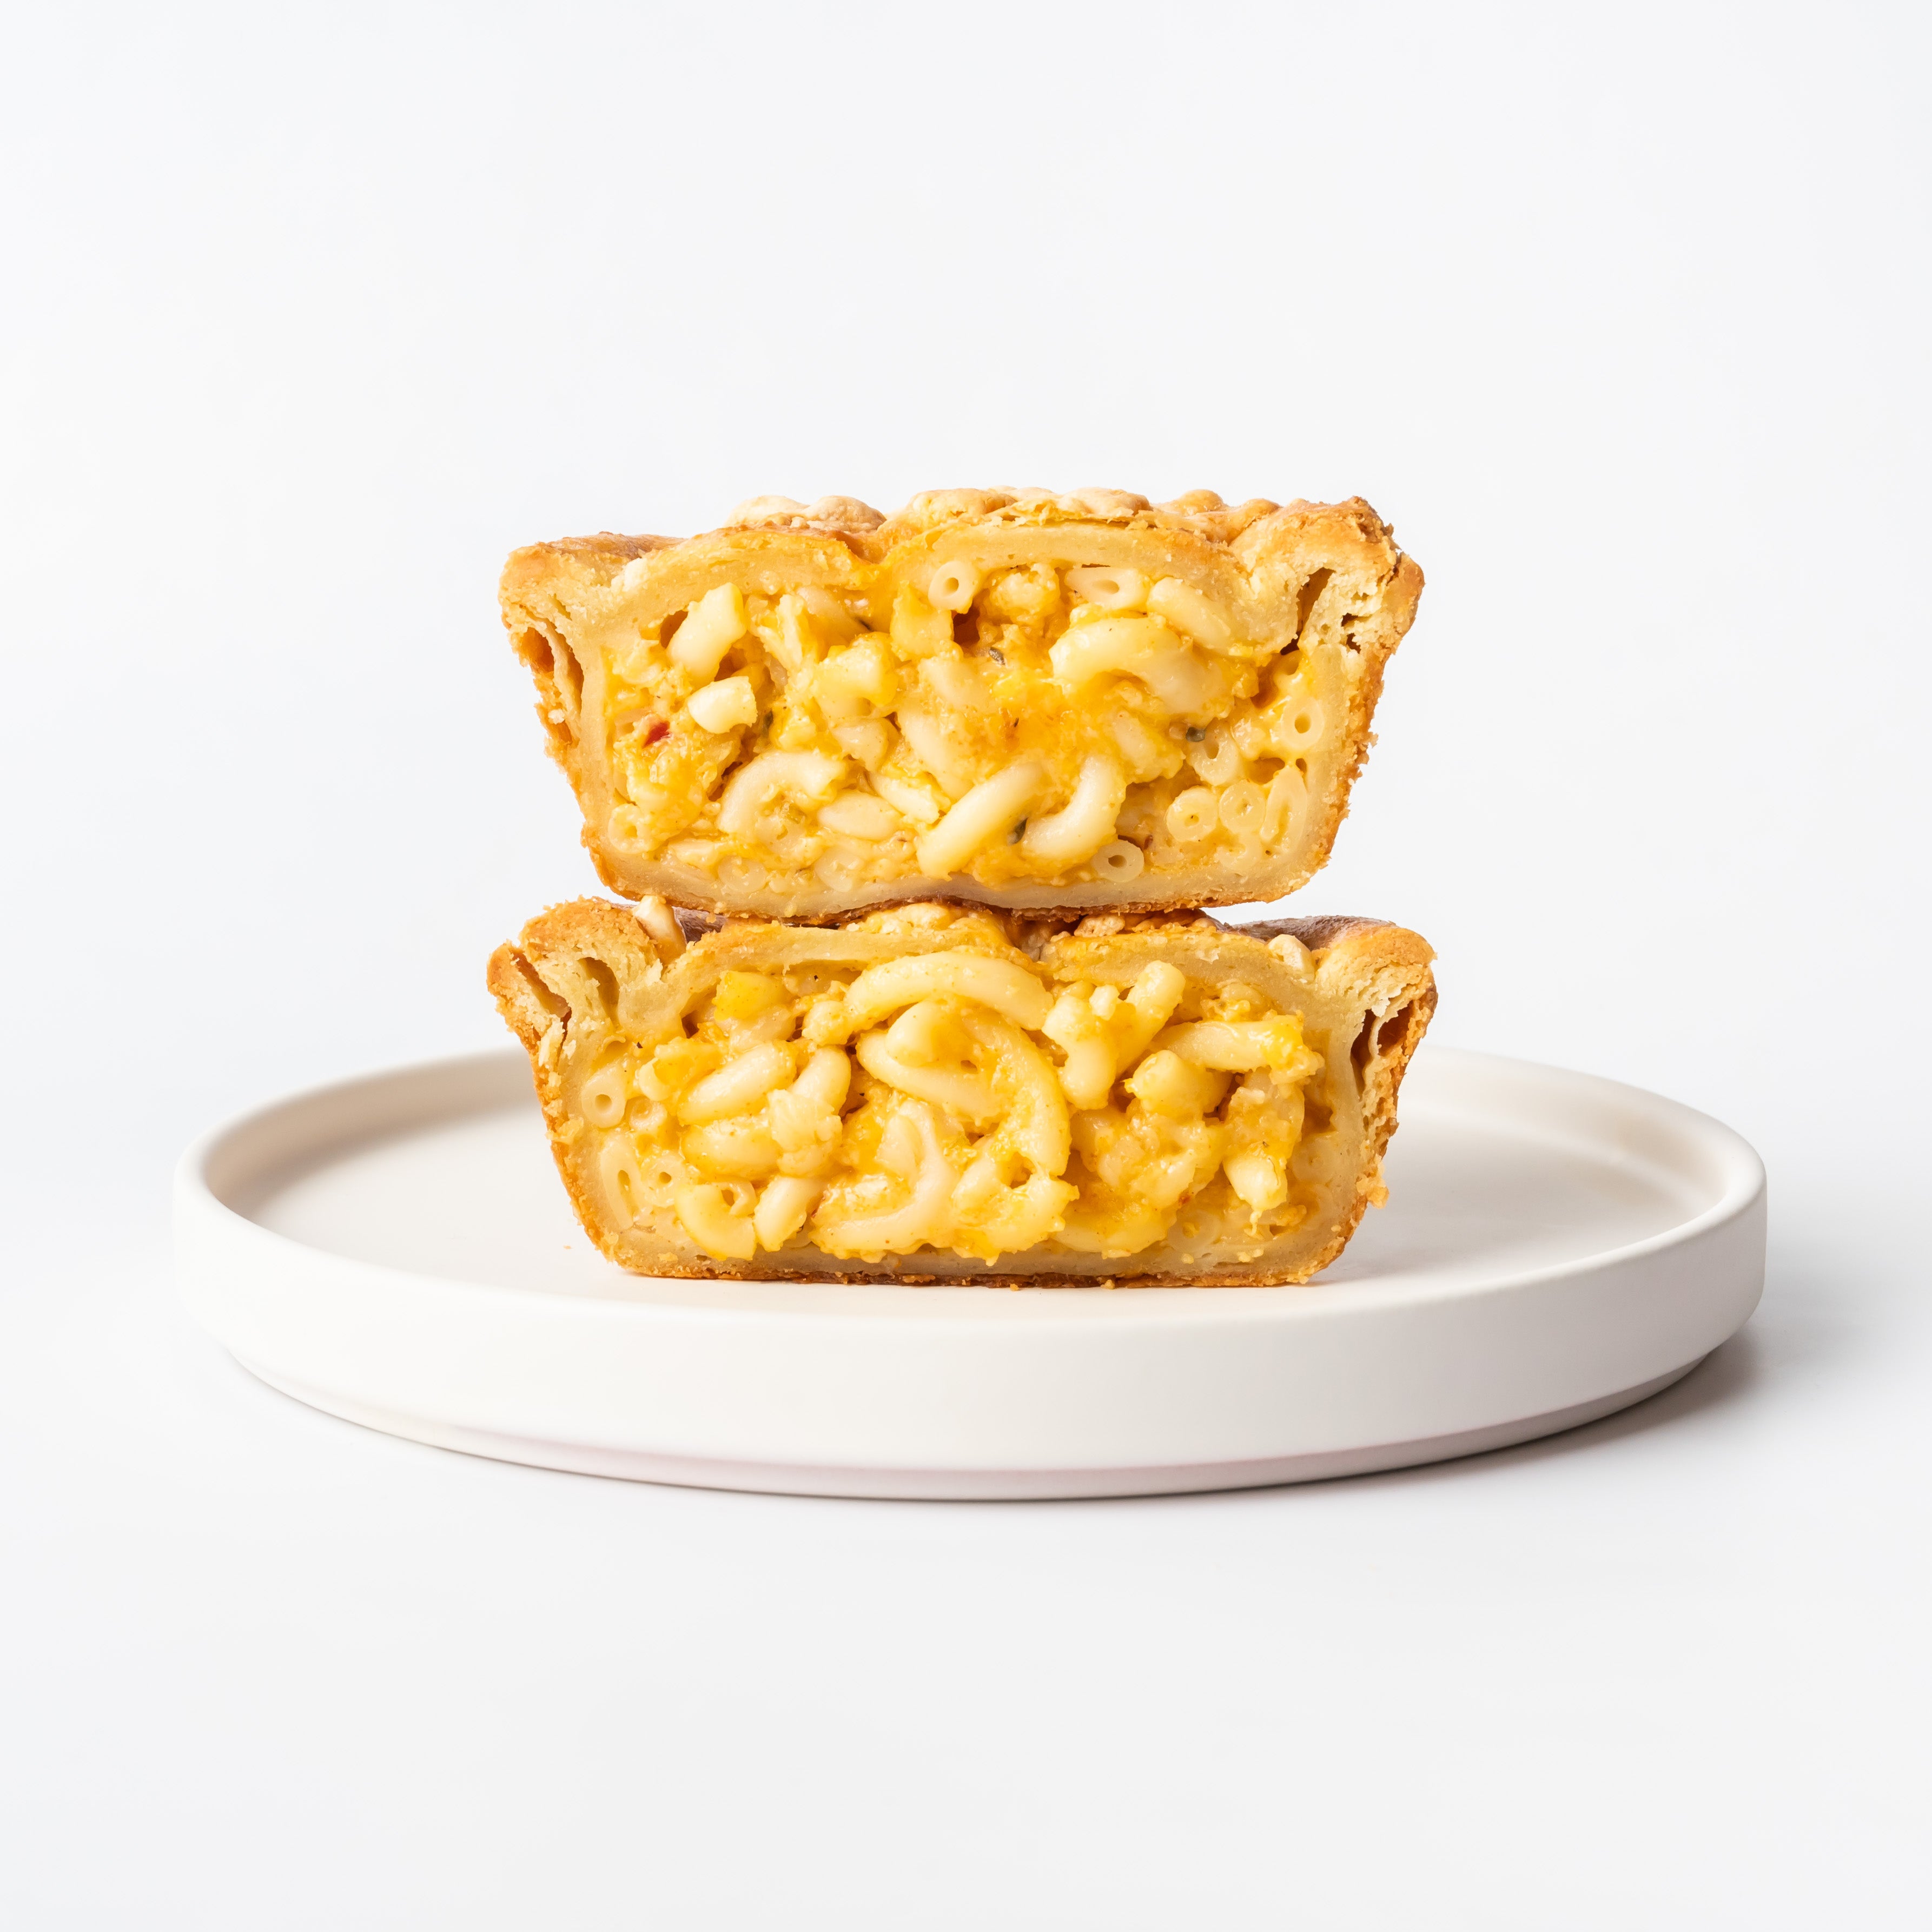 Mac'n'cheese pie